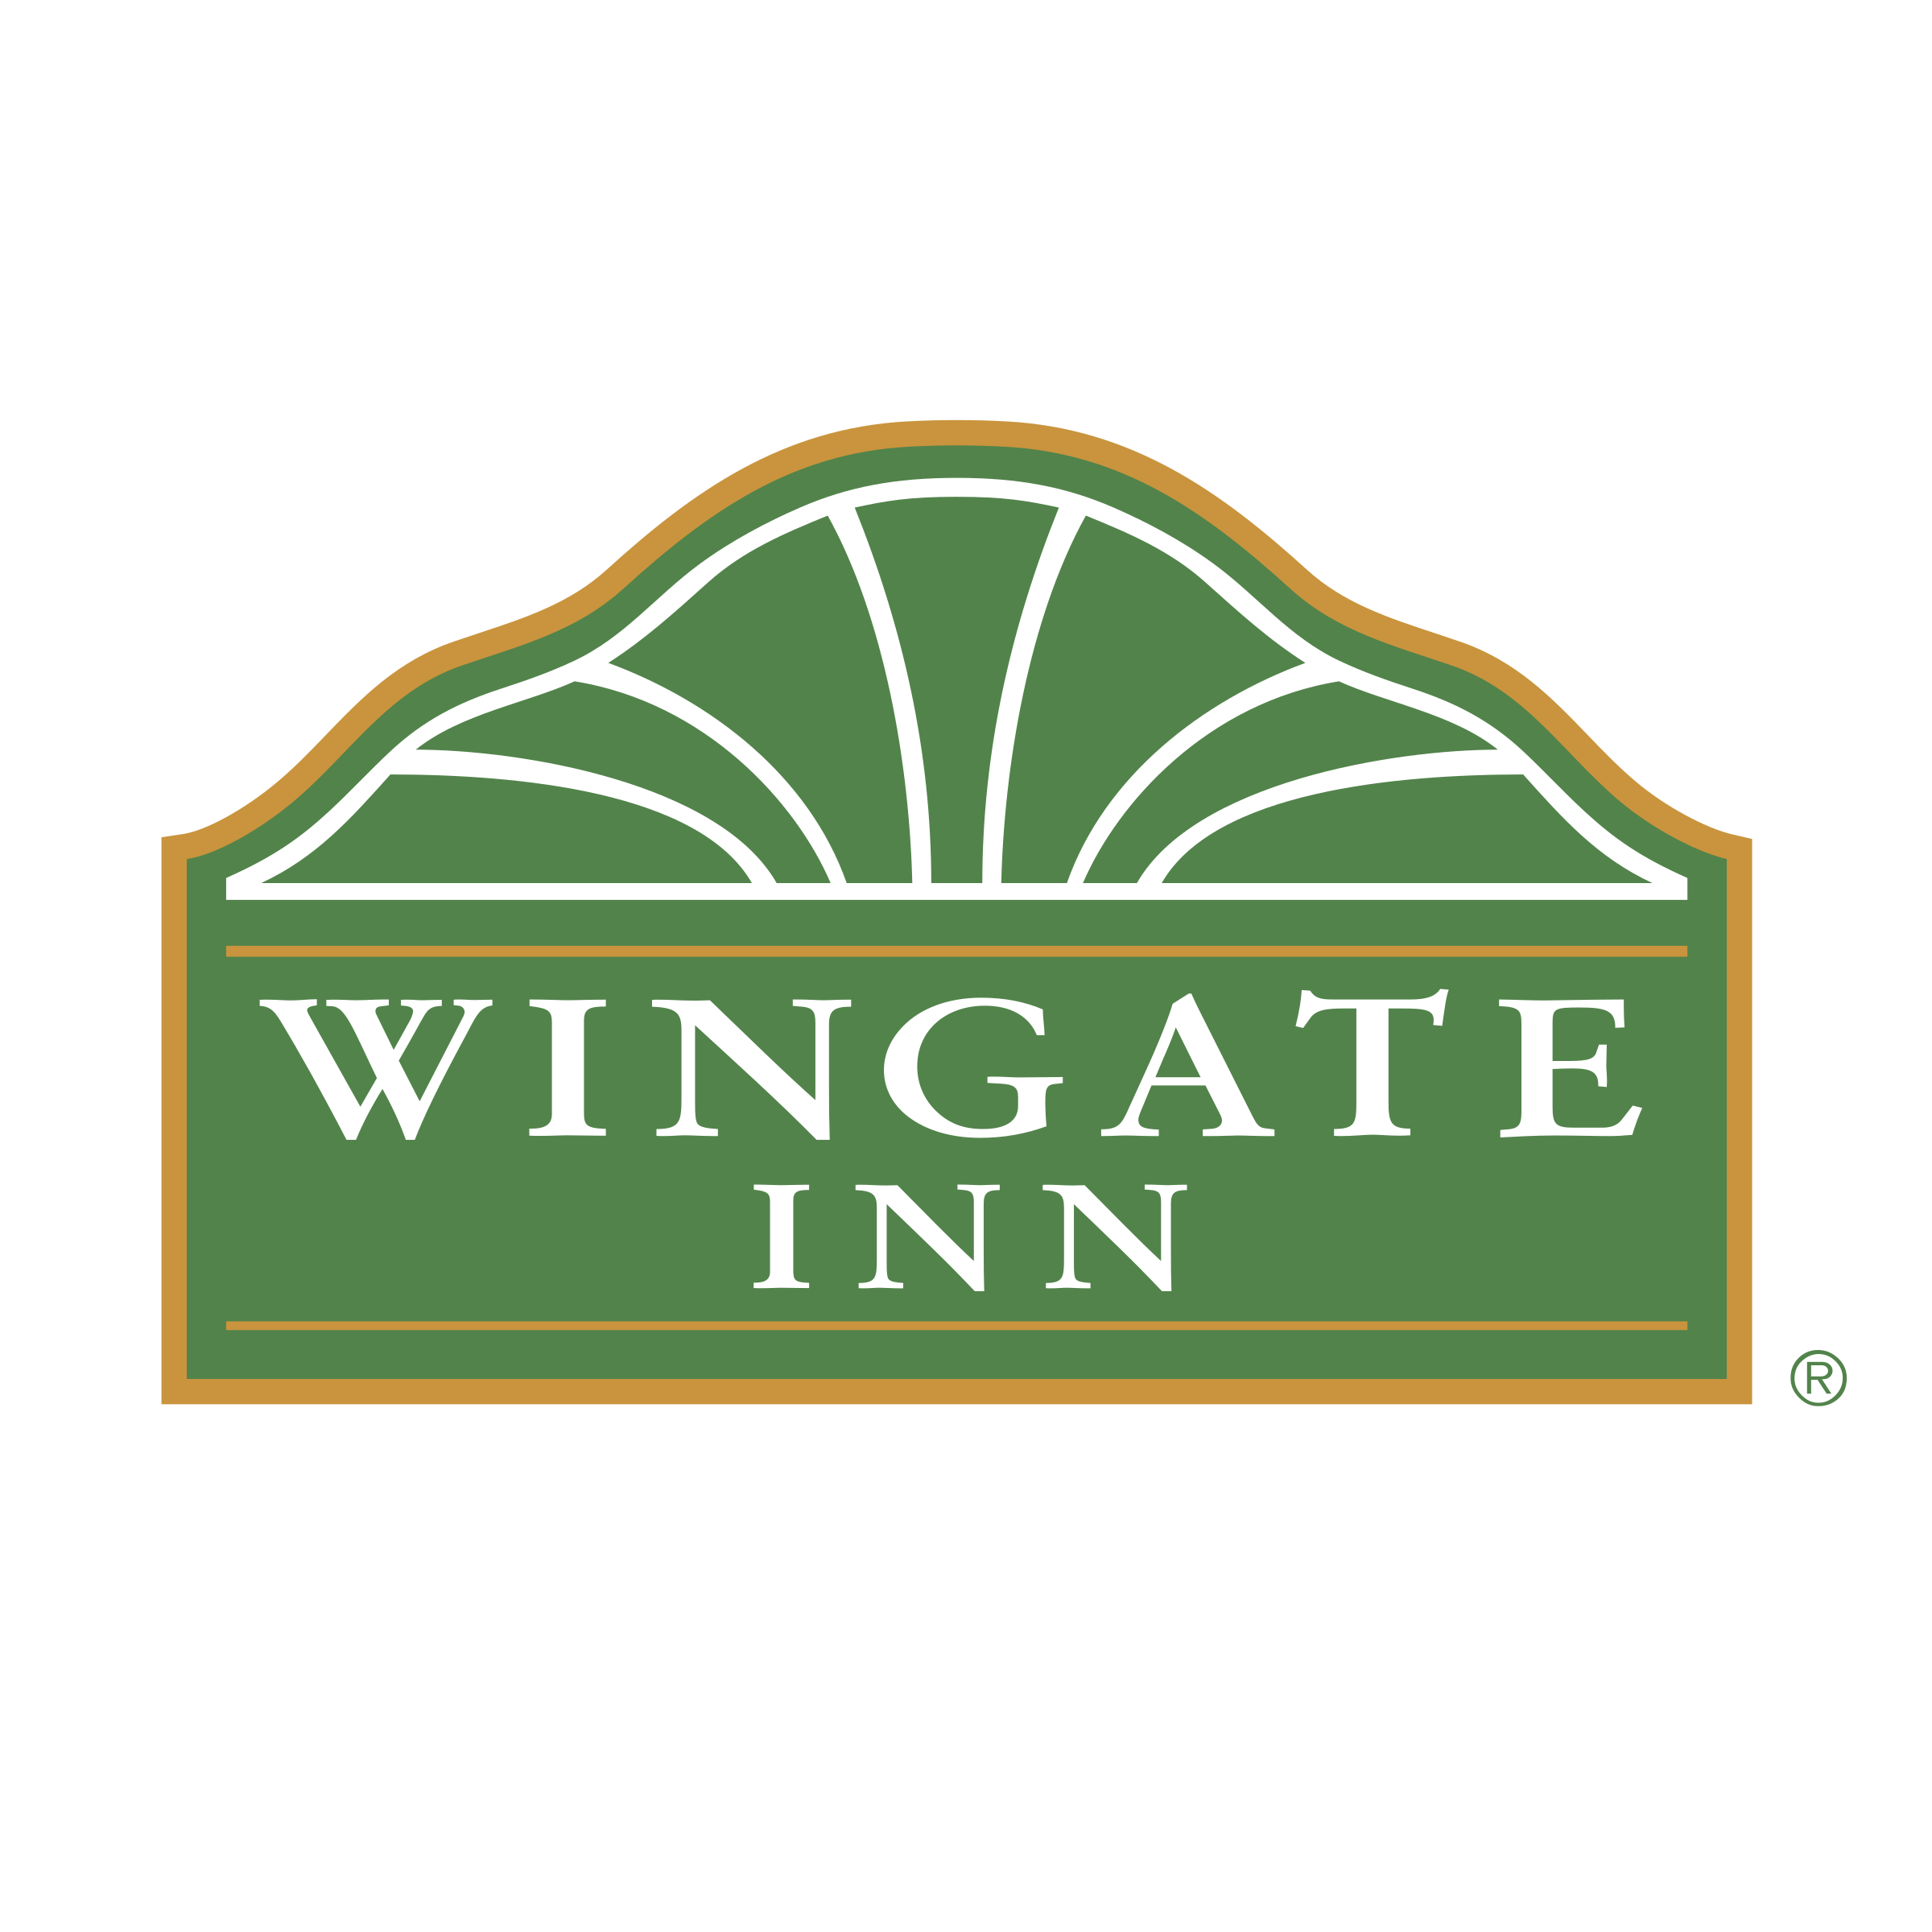 Wingate Logo - Wingate Inn Logo PNG Transparent & SVG Vector - Freebie Supply